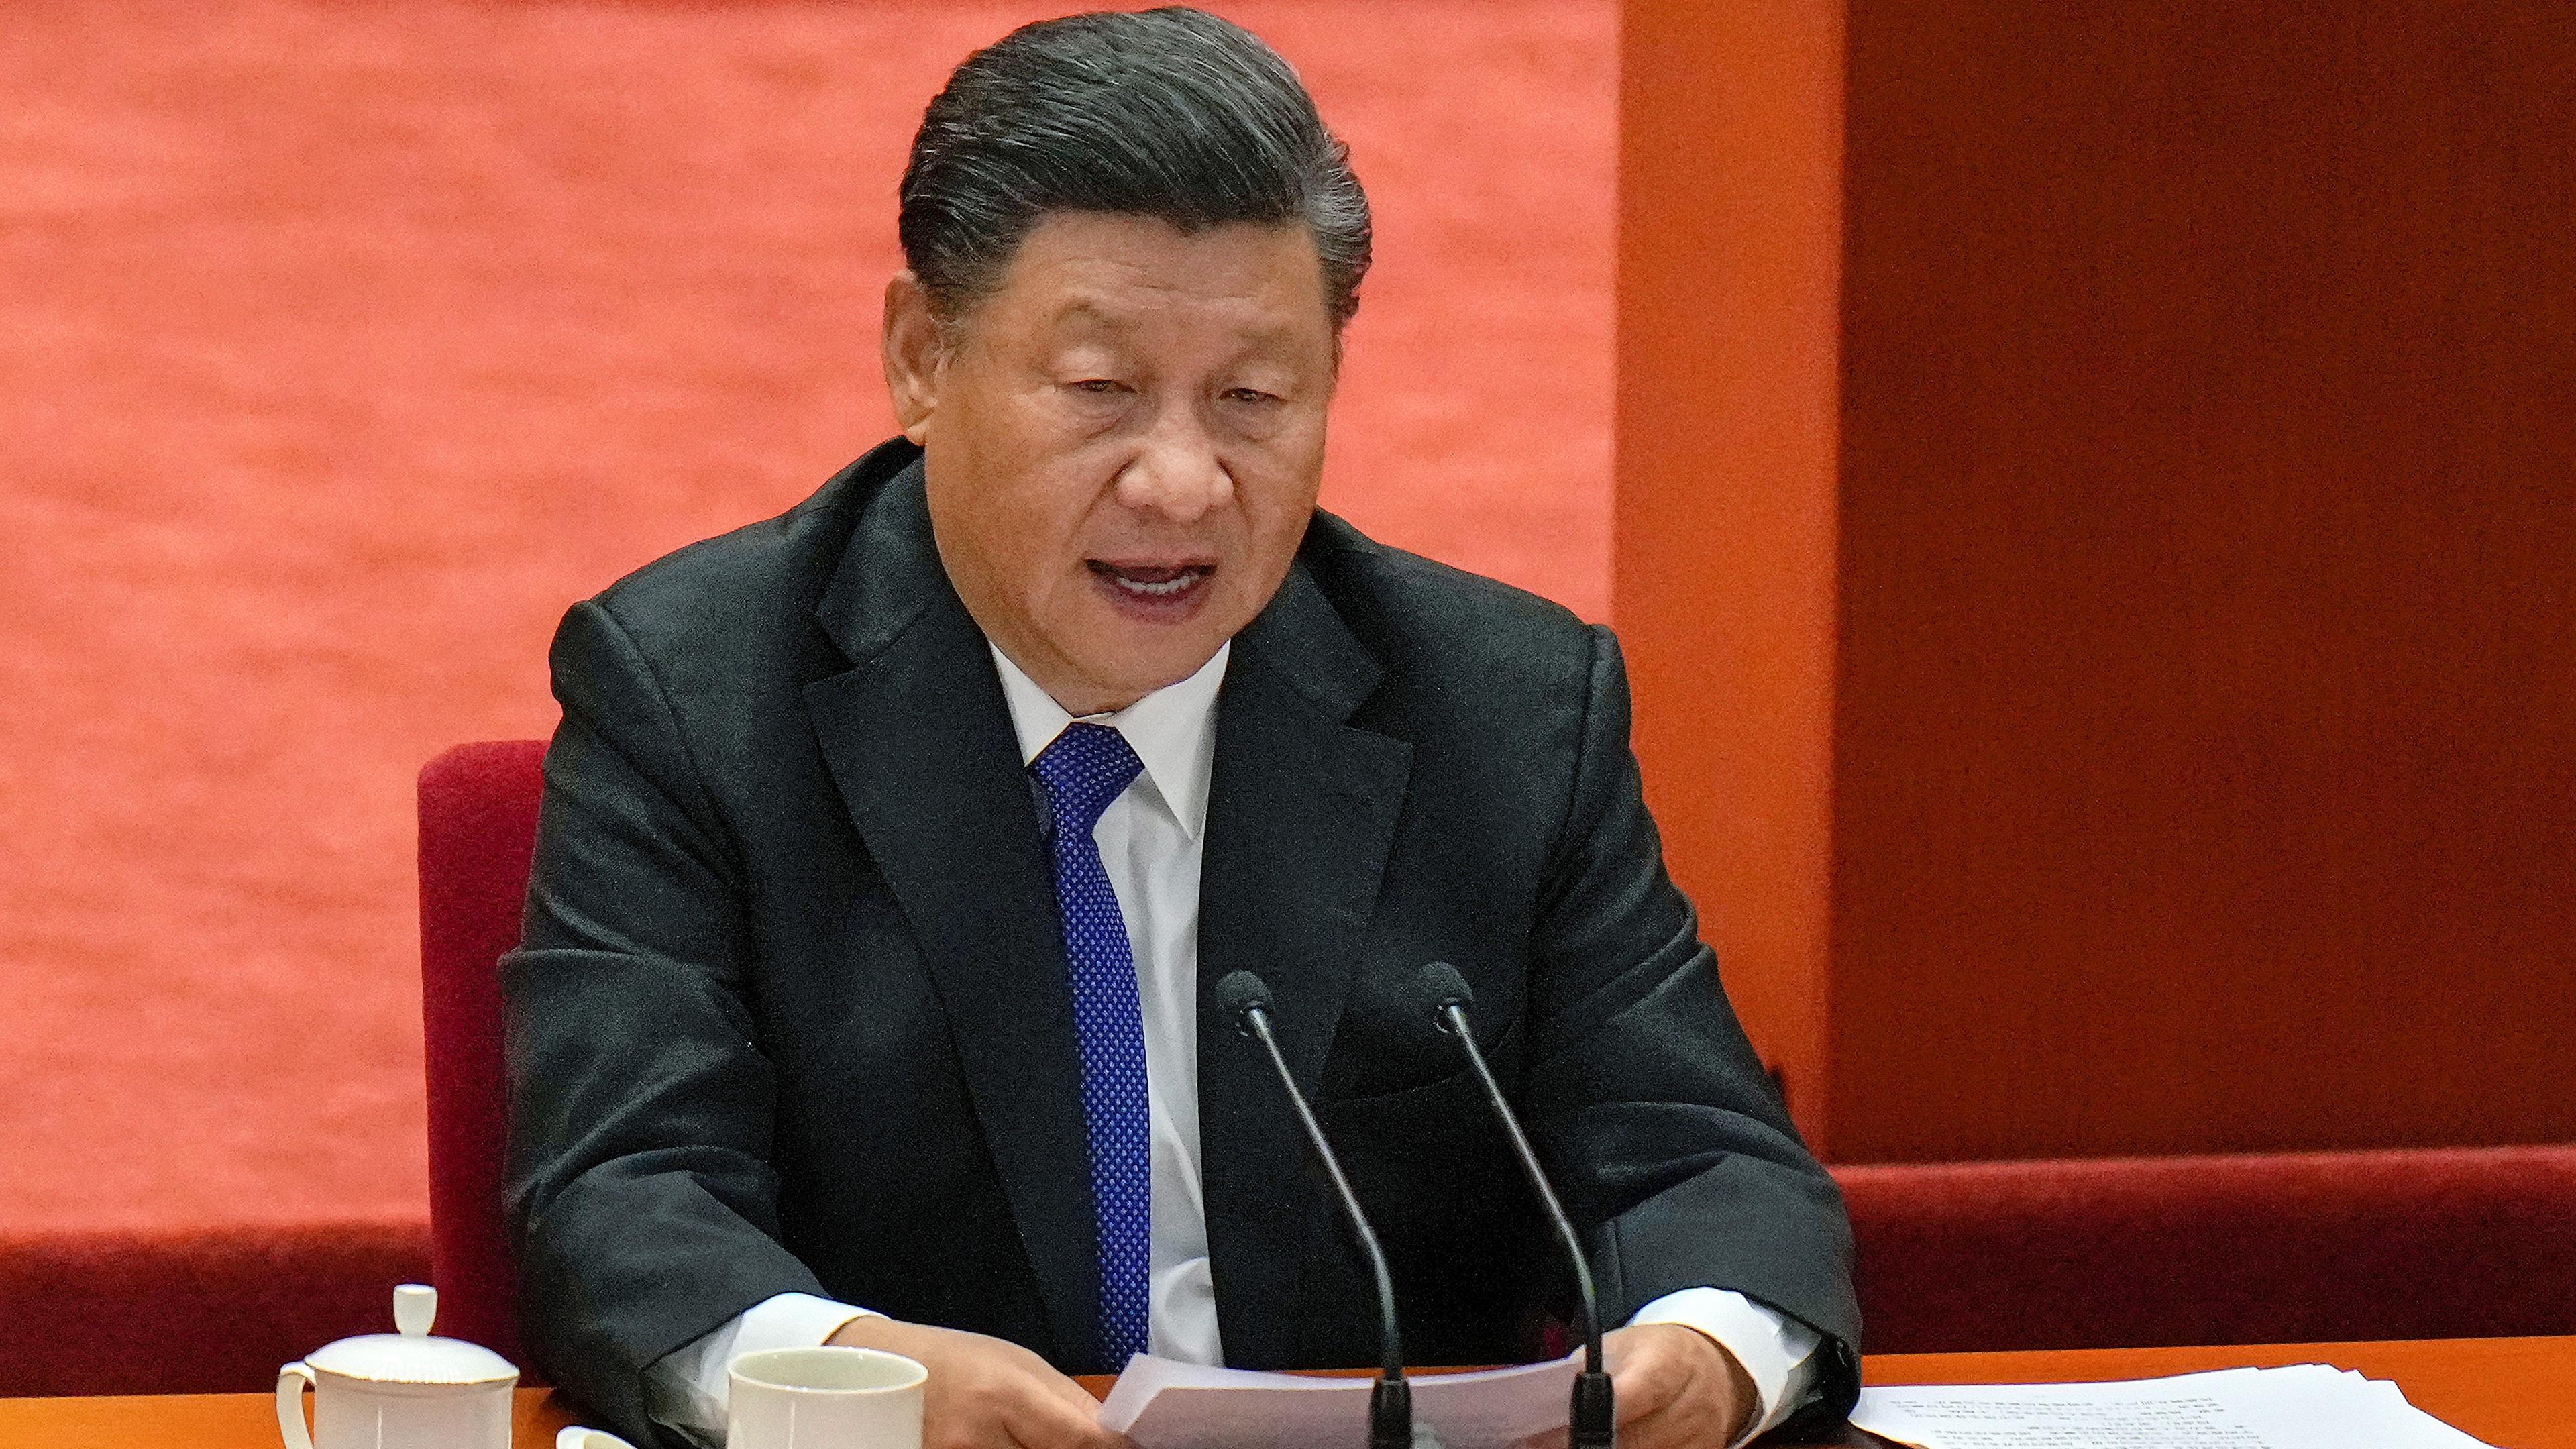 Xi Jinping, aufgenommen am 08.11.2021 in Peking (China)